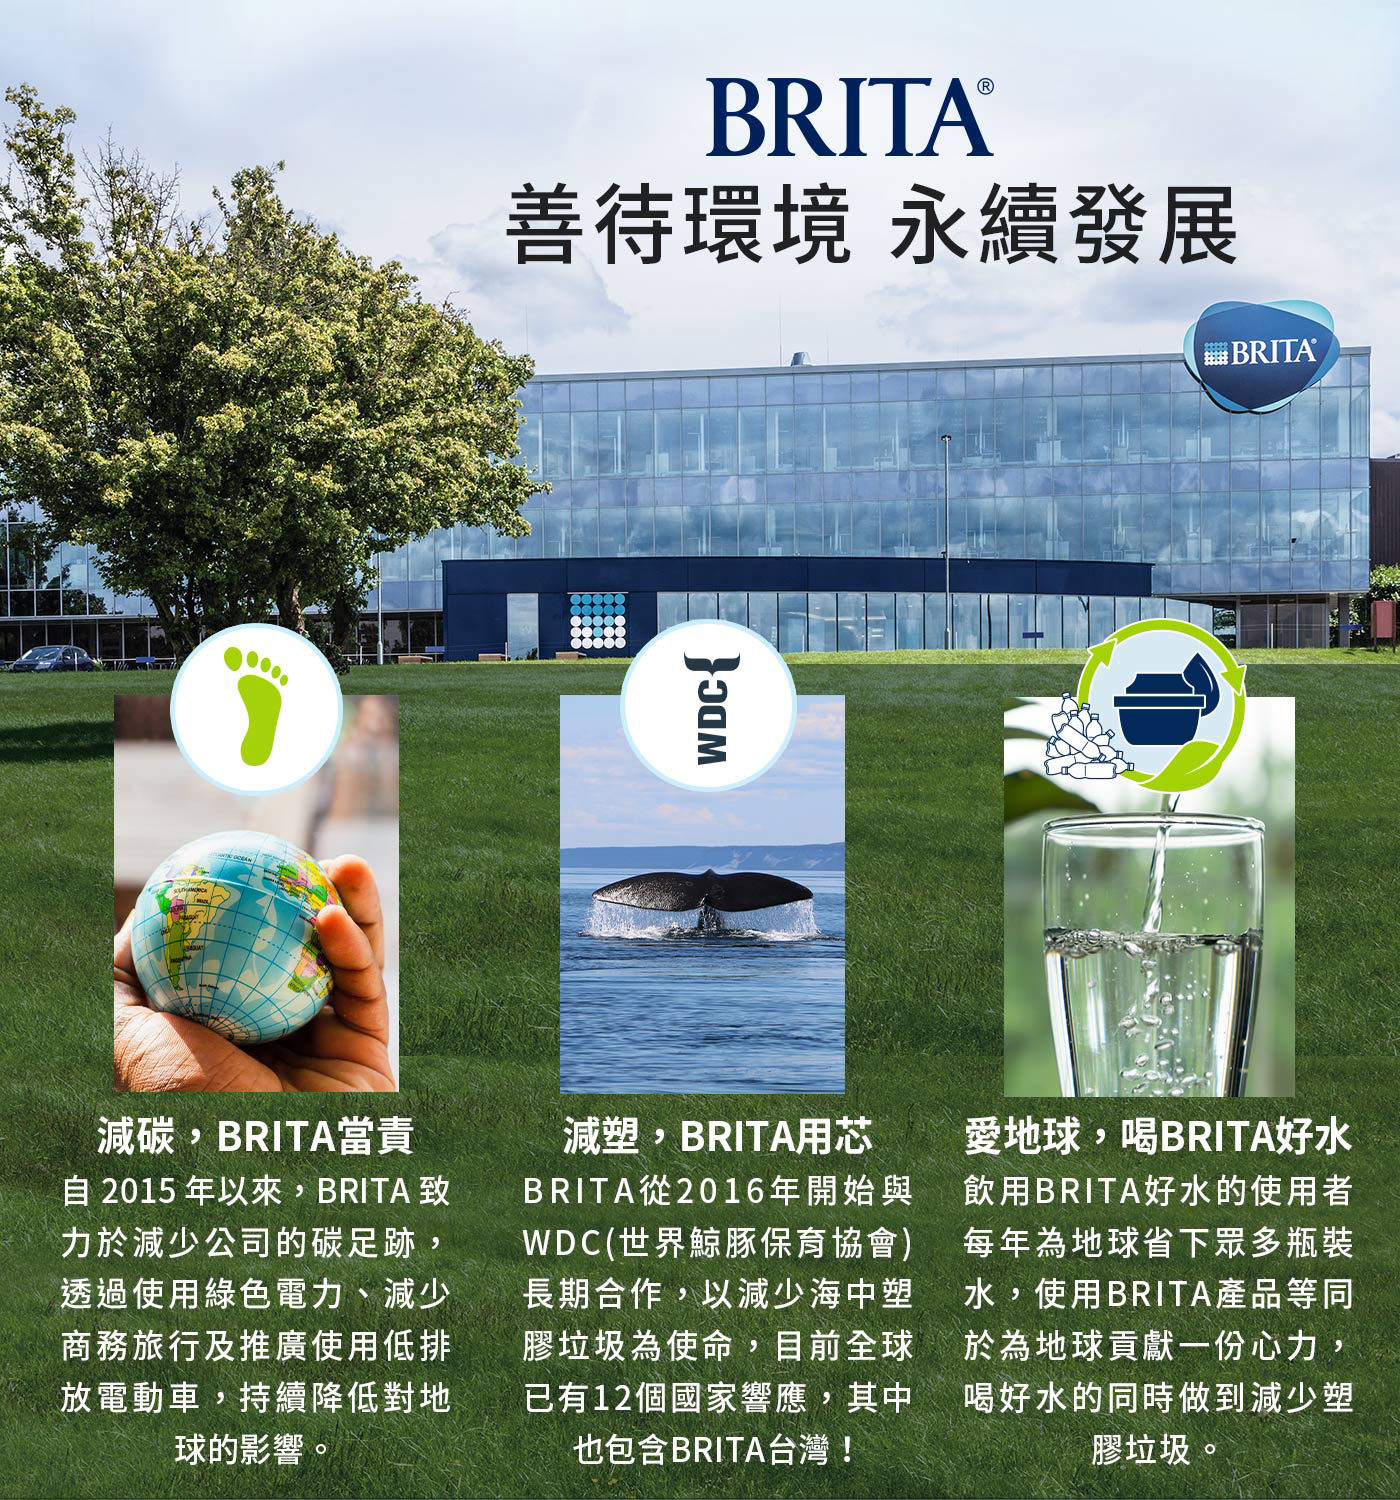 Brita 櫥下型濾芯二入組 A1000減碳BRITA當責.減塑BRITA用芯.愛地球喝BRITA好水.善待環境永續發展